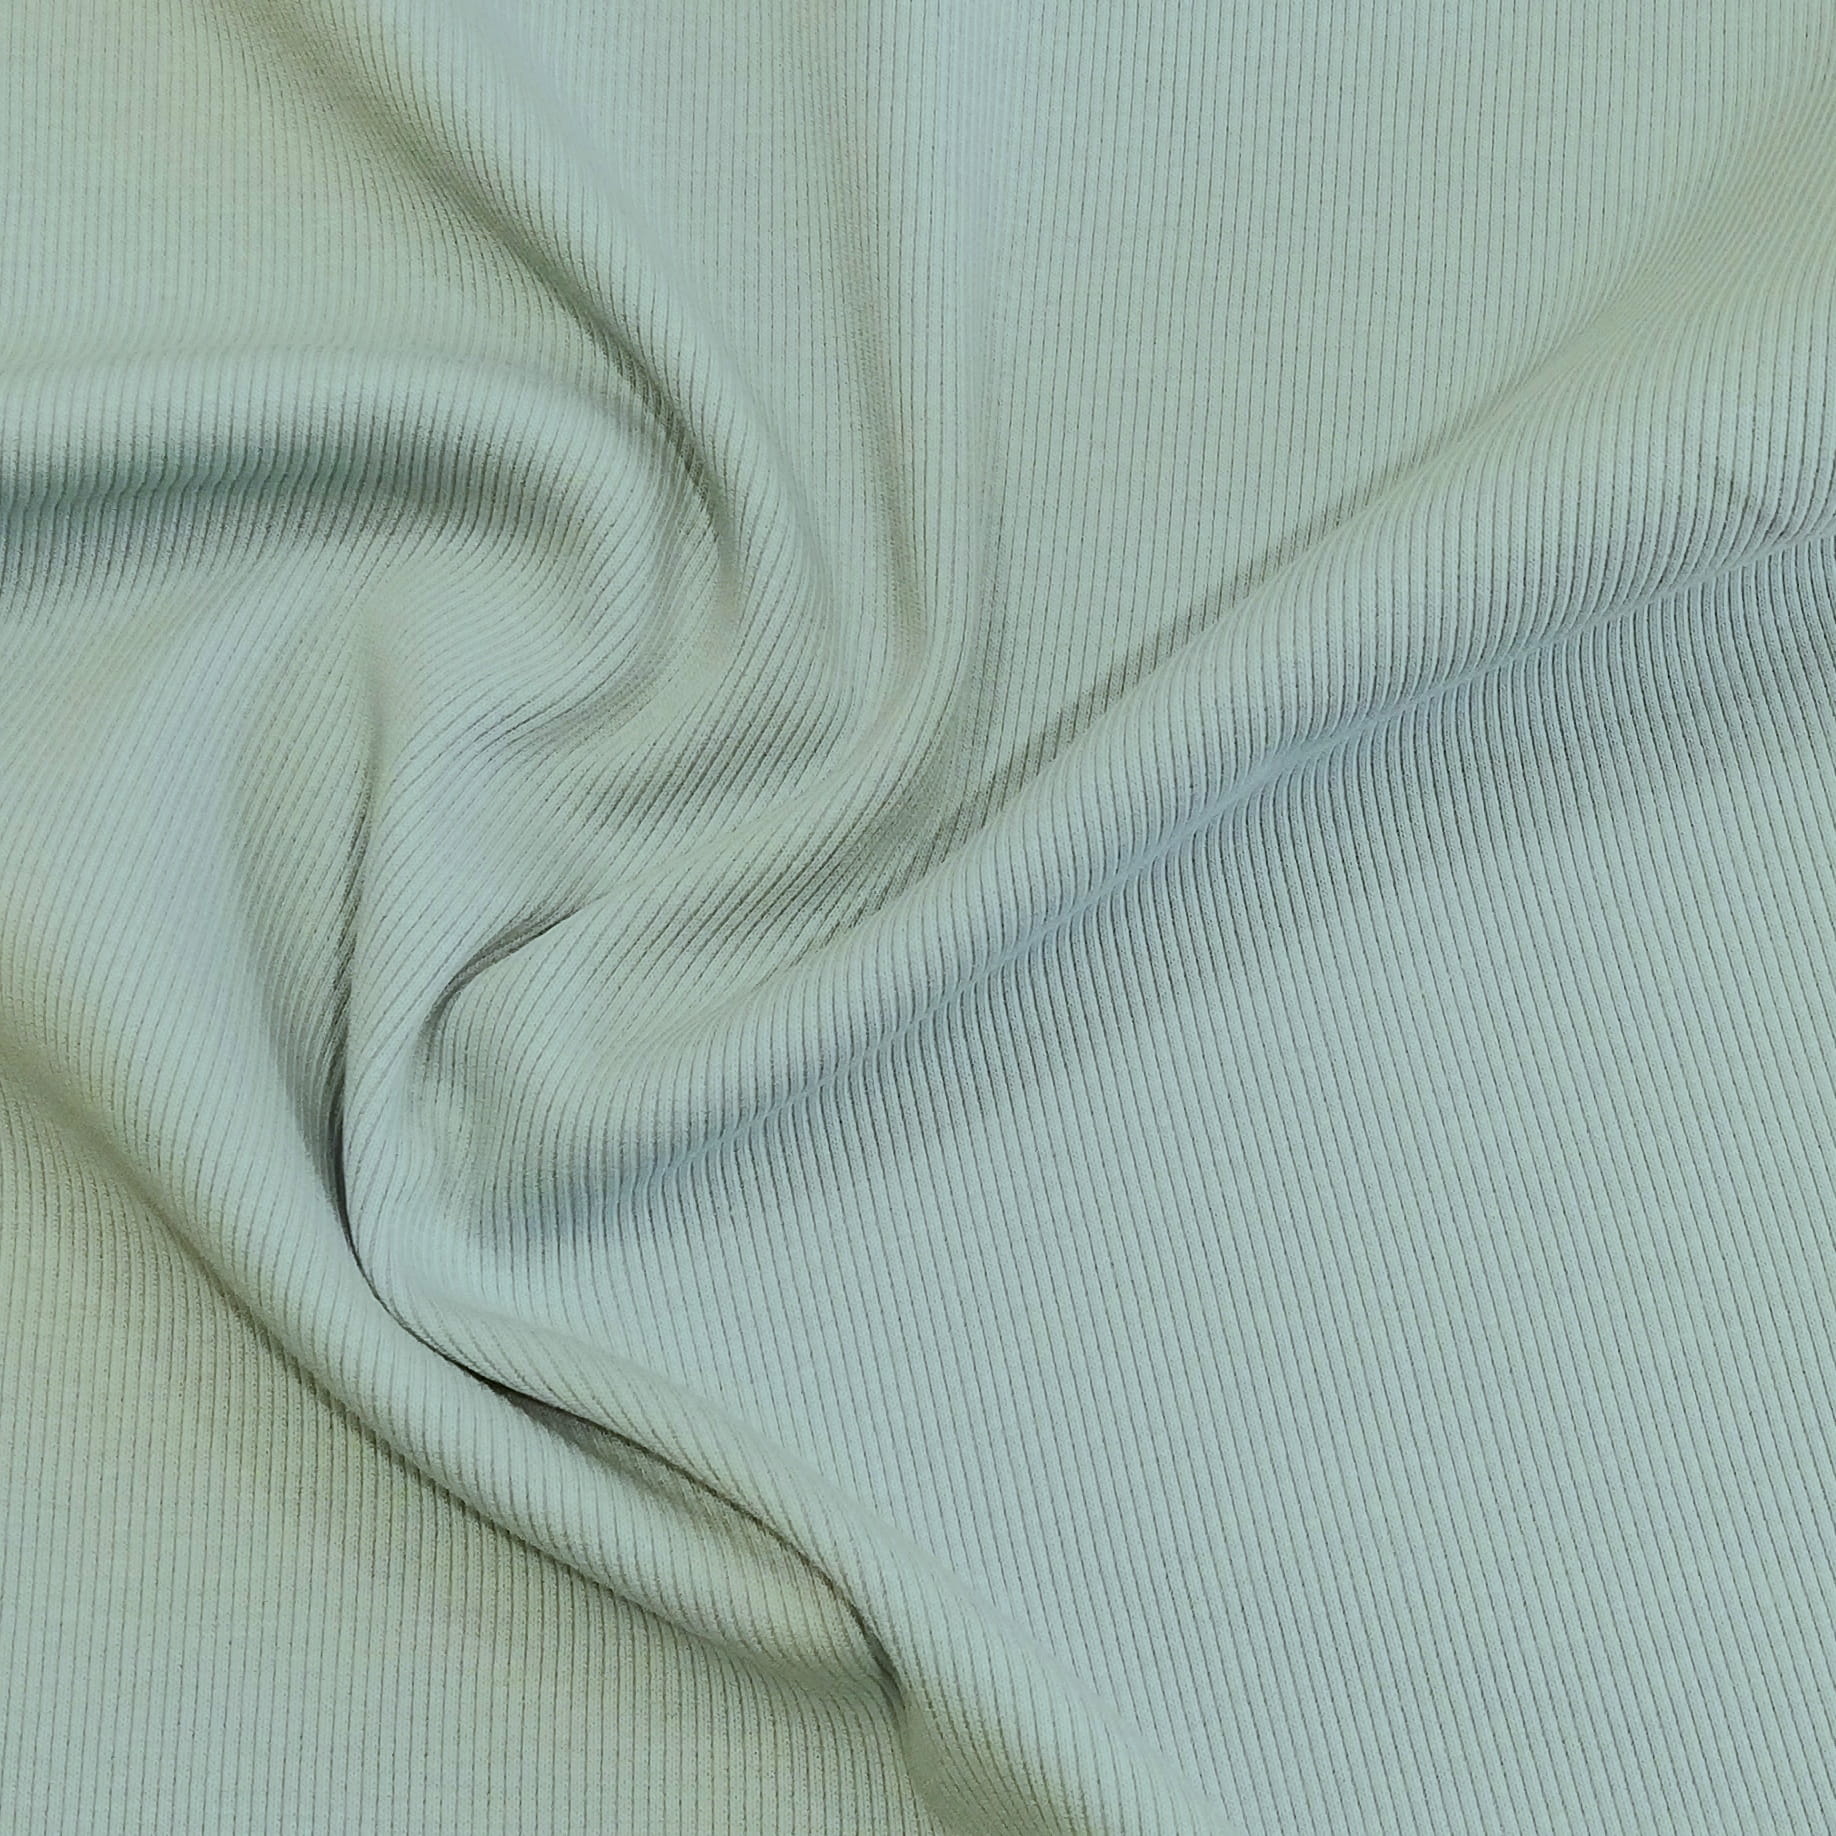 Olabela Holiday Blue 2x2 Ribbed Knit cotton fabric